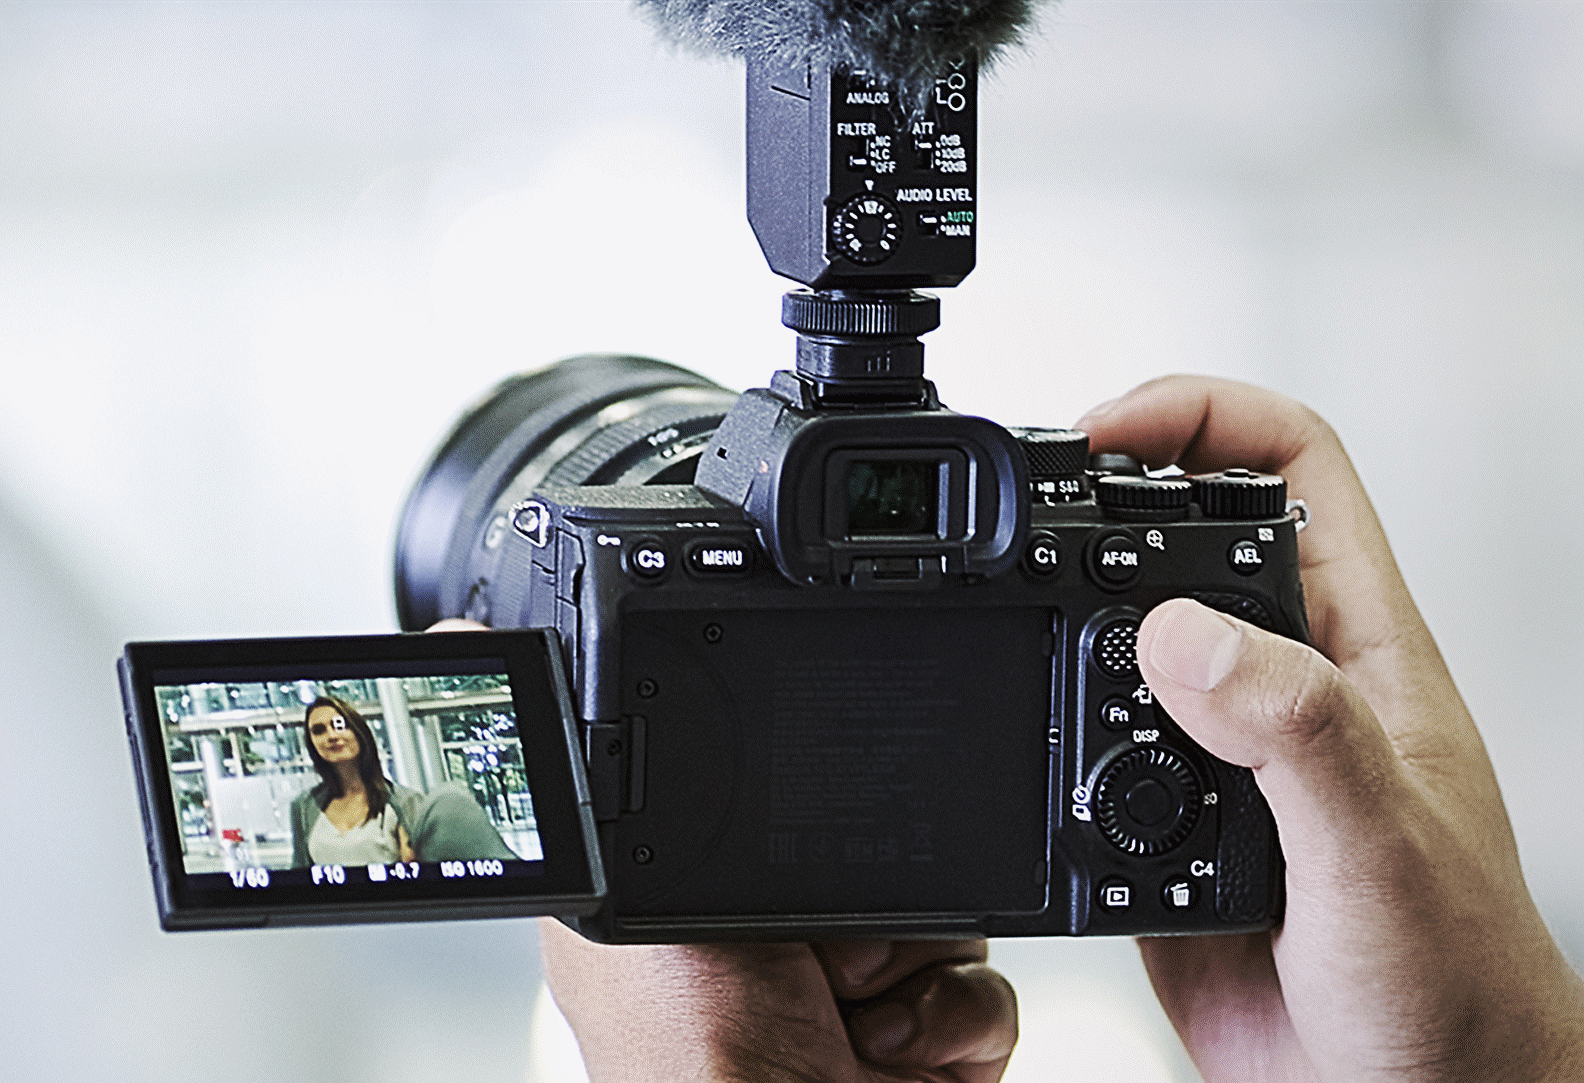 Foto kreator video sedang merekam dengan stabilisasi gambar Mode Aktif pada kamera, tanpa perlengkapan lain